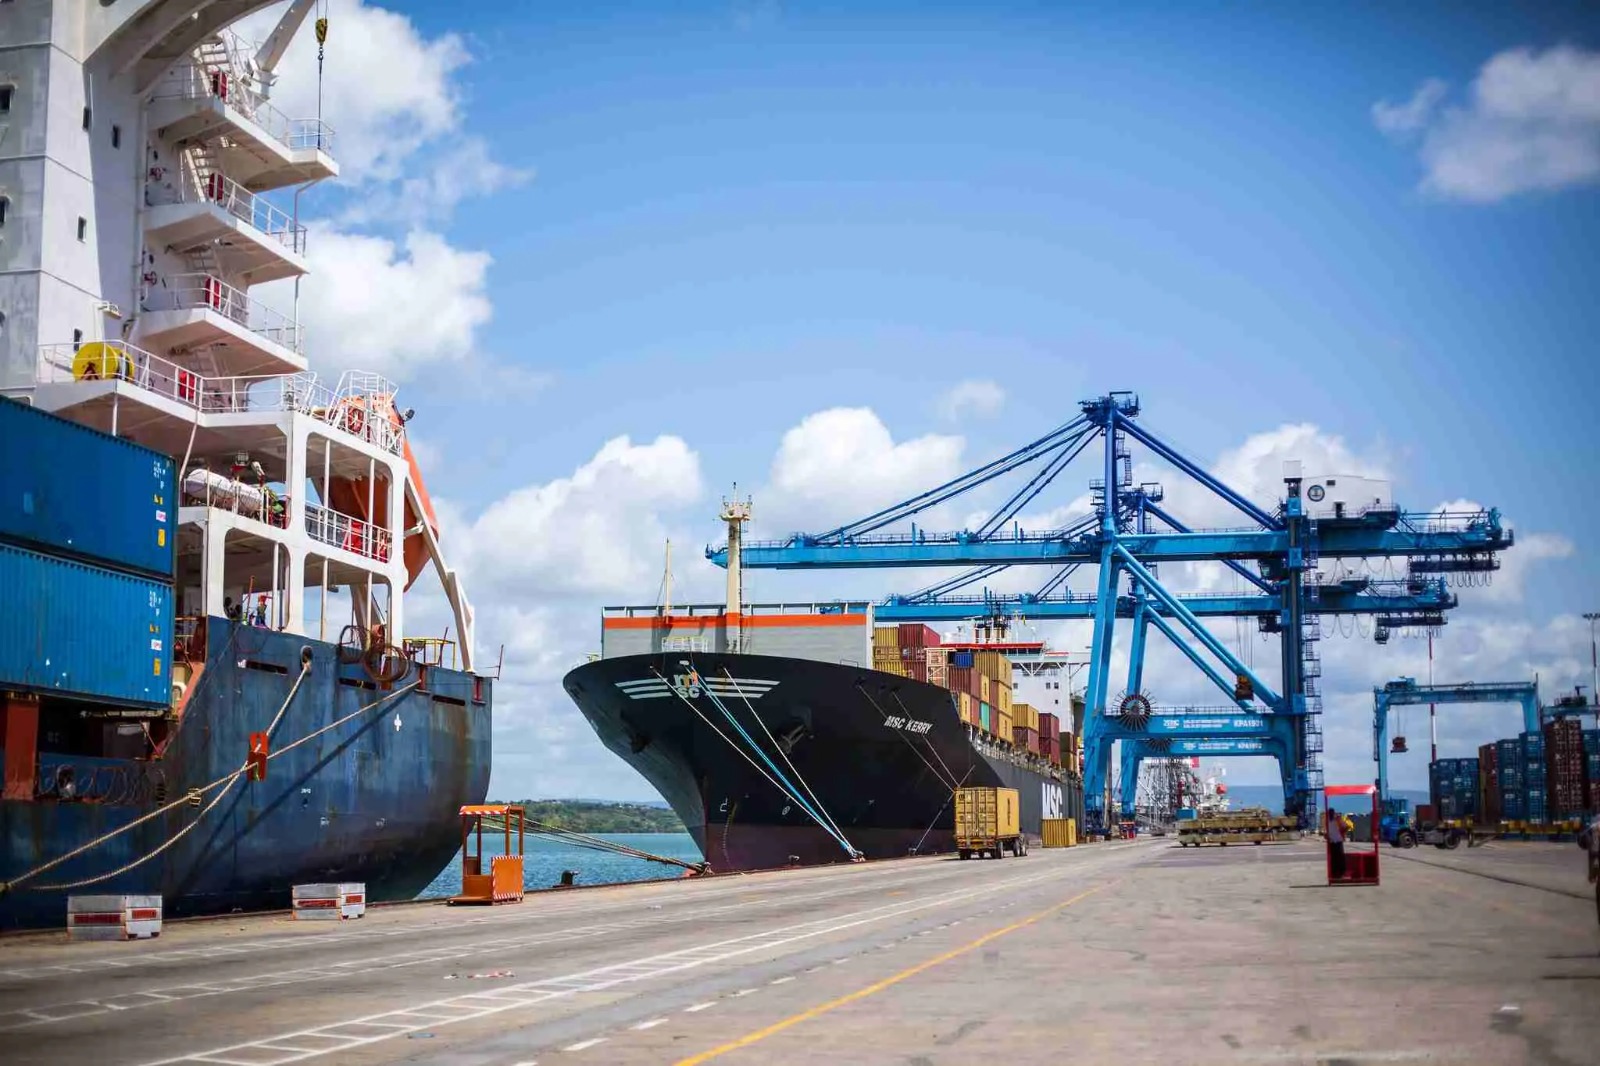 File image of ships at the Mombasa Port.